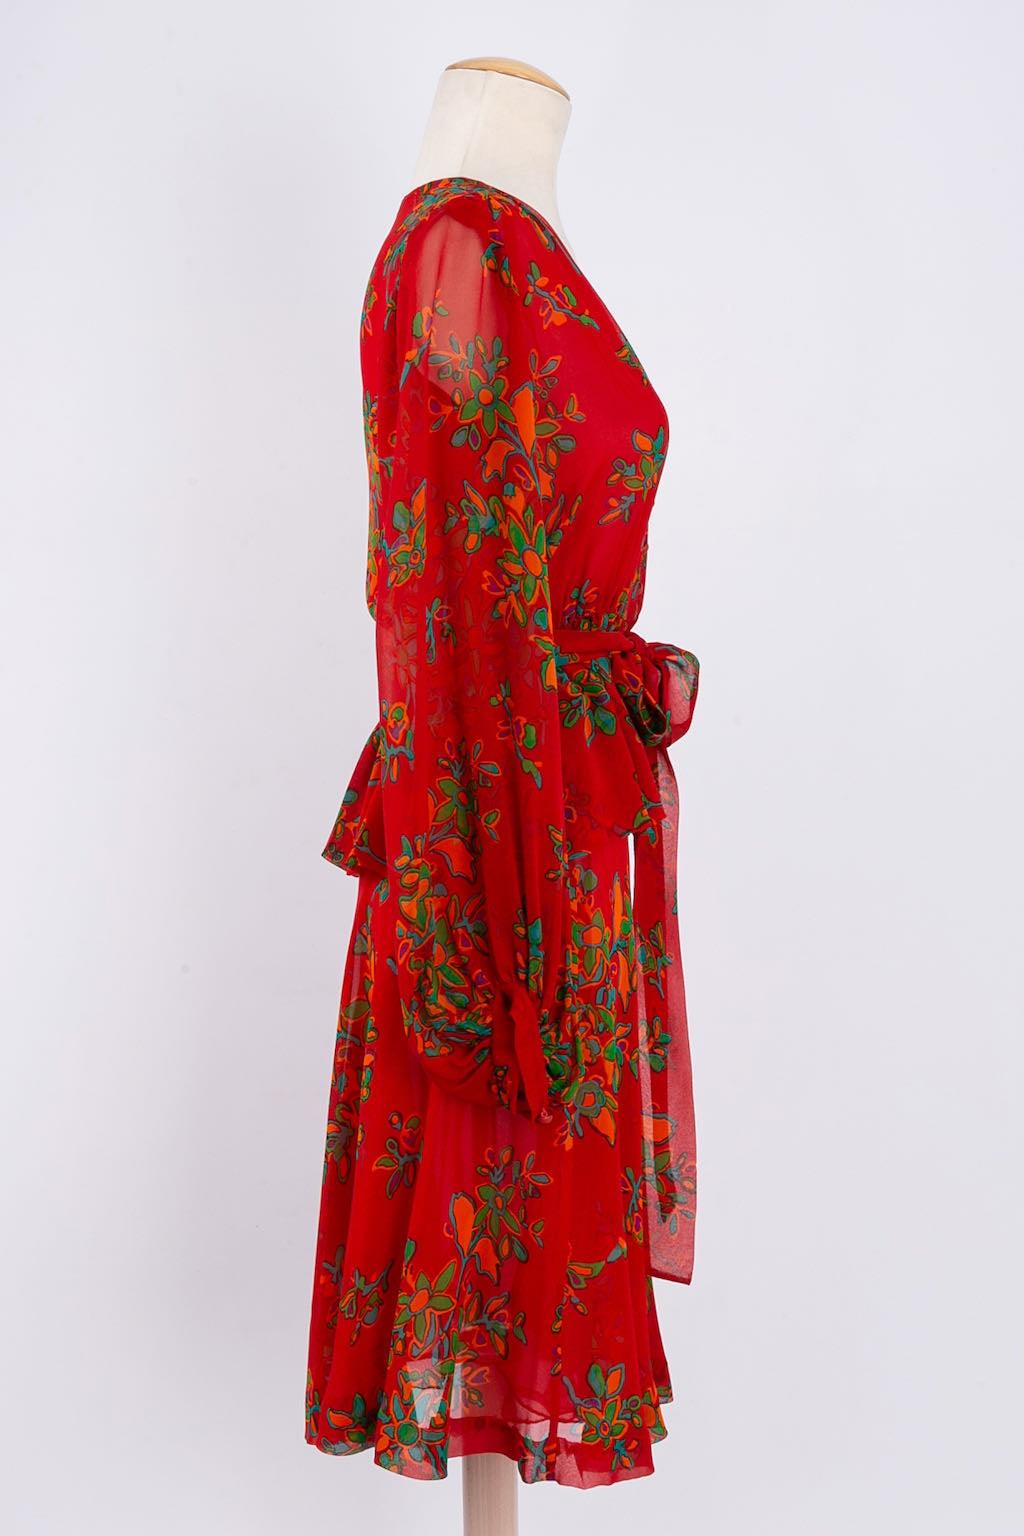 Yves Saint Laurent Silk Set, Size 36FR For Sale 3